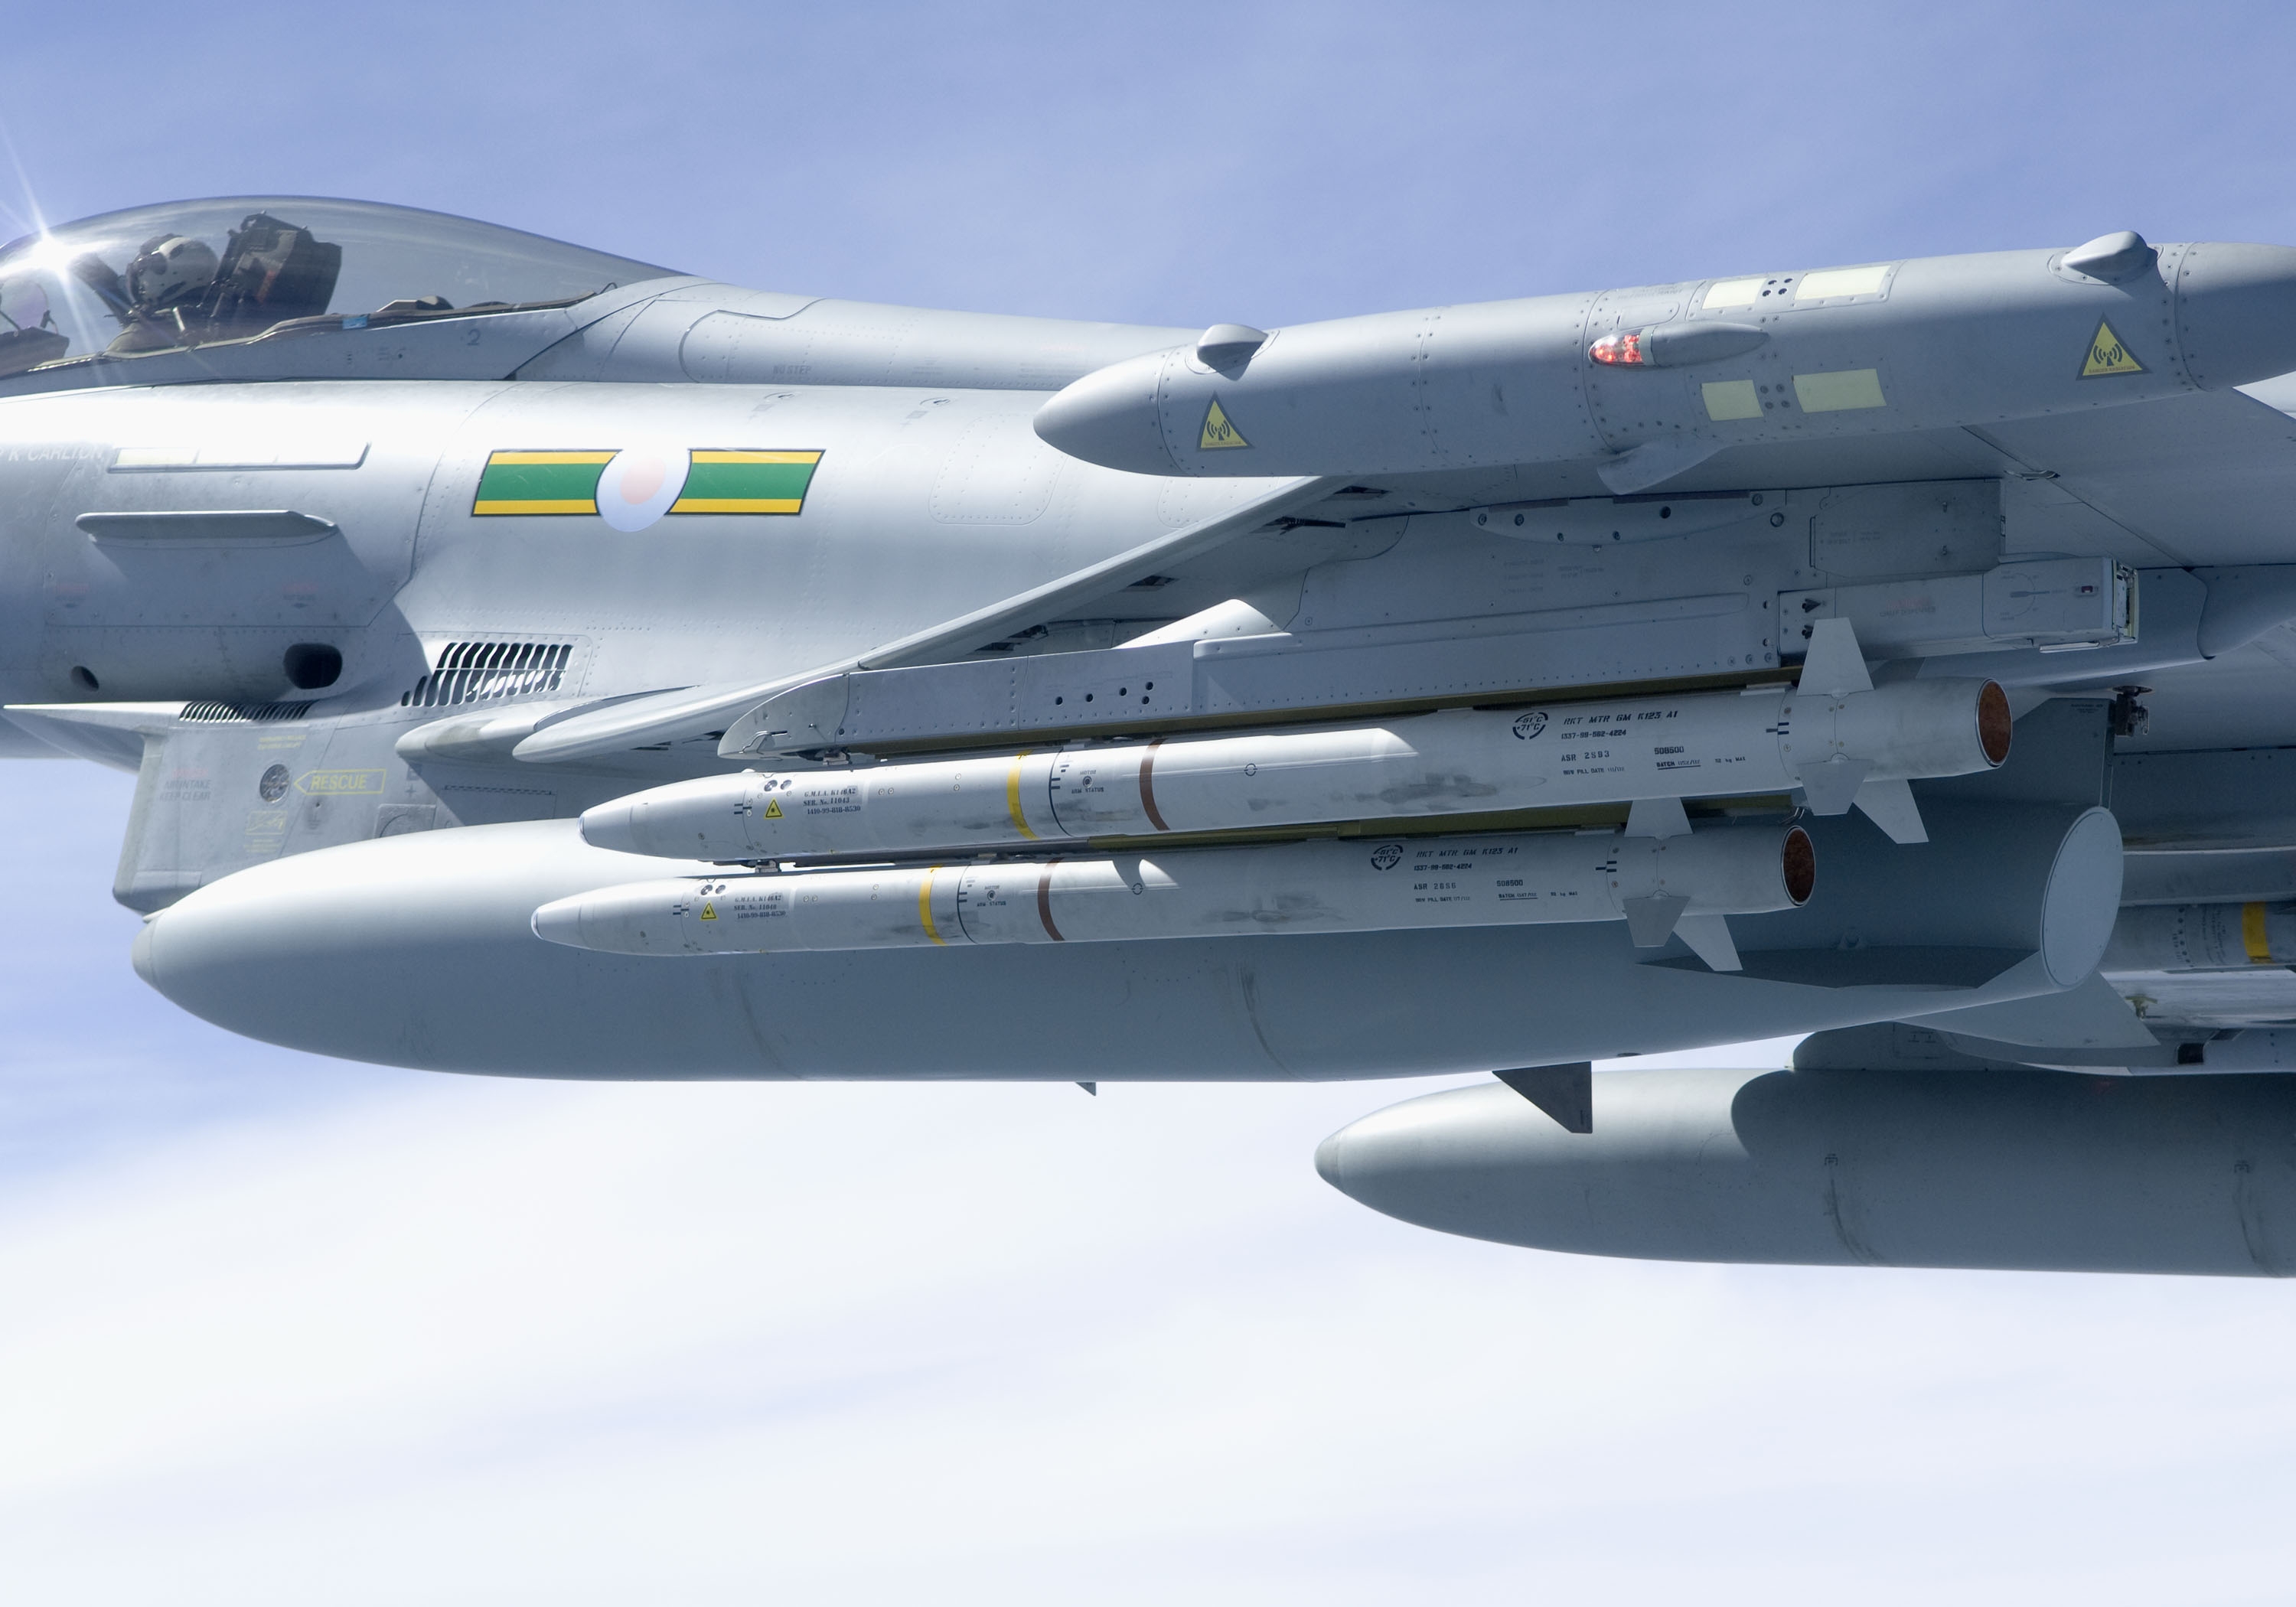 ASRAAM_Missiles_Fitted_to_RAF_Typhoon_Jet_MOD_45155903.jpg